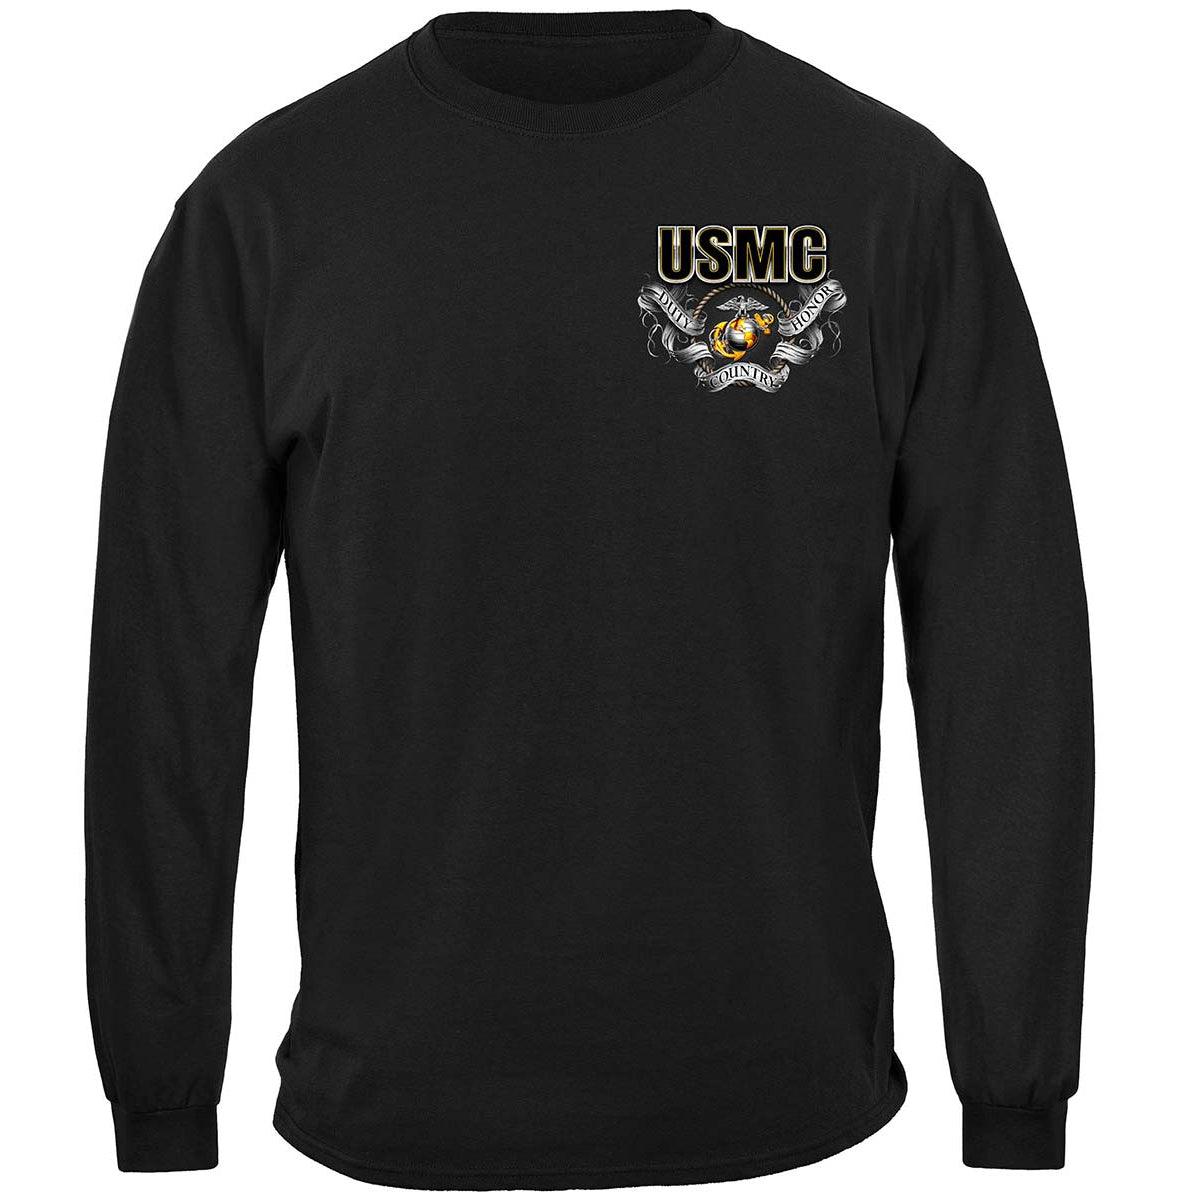 USMC Veteran T-Shirt - Military Republic